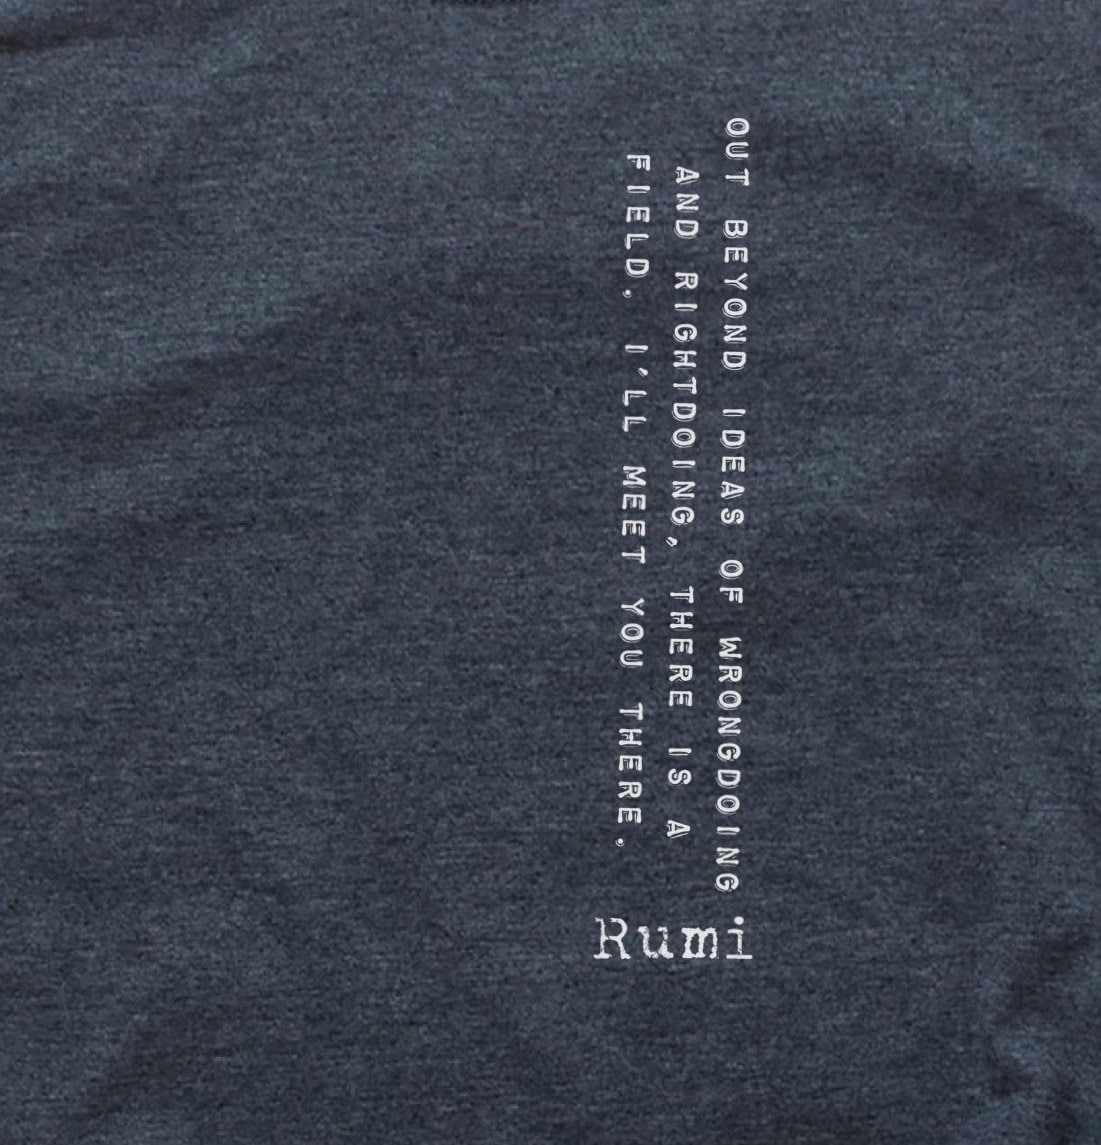 RUMI Shirt Poetry T-shirt Rumi Men's Zen Meditation T | Etsy